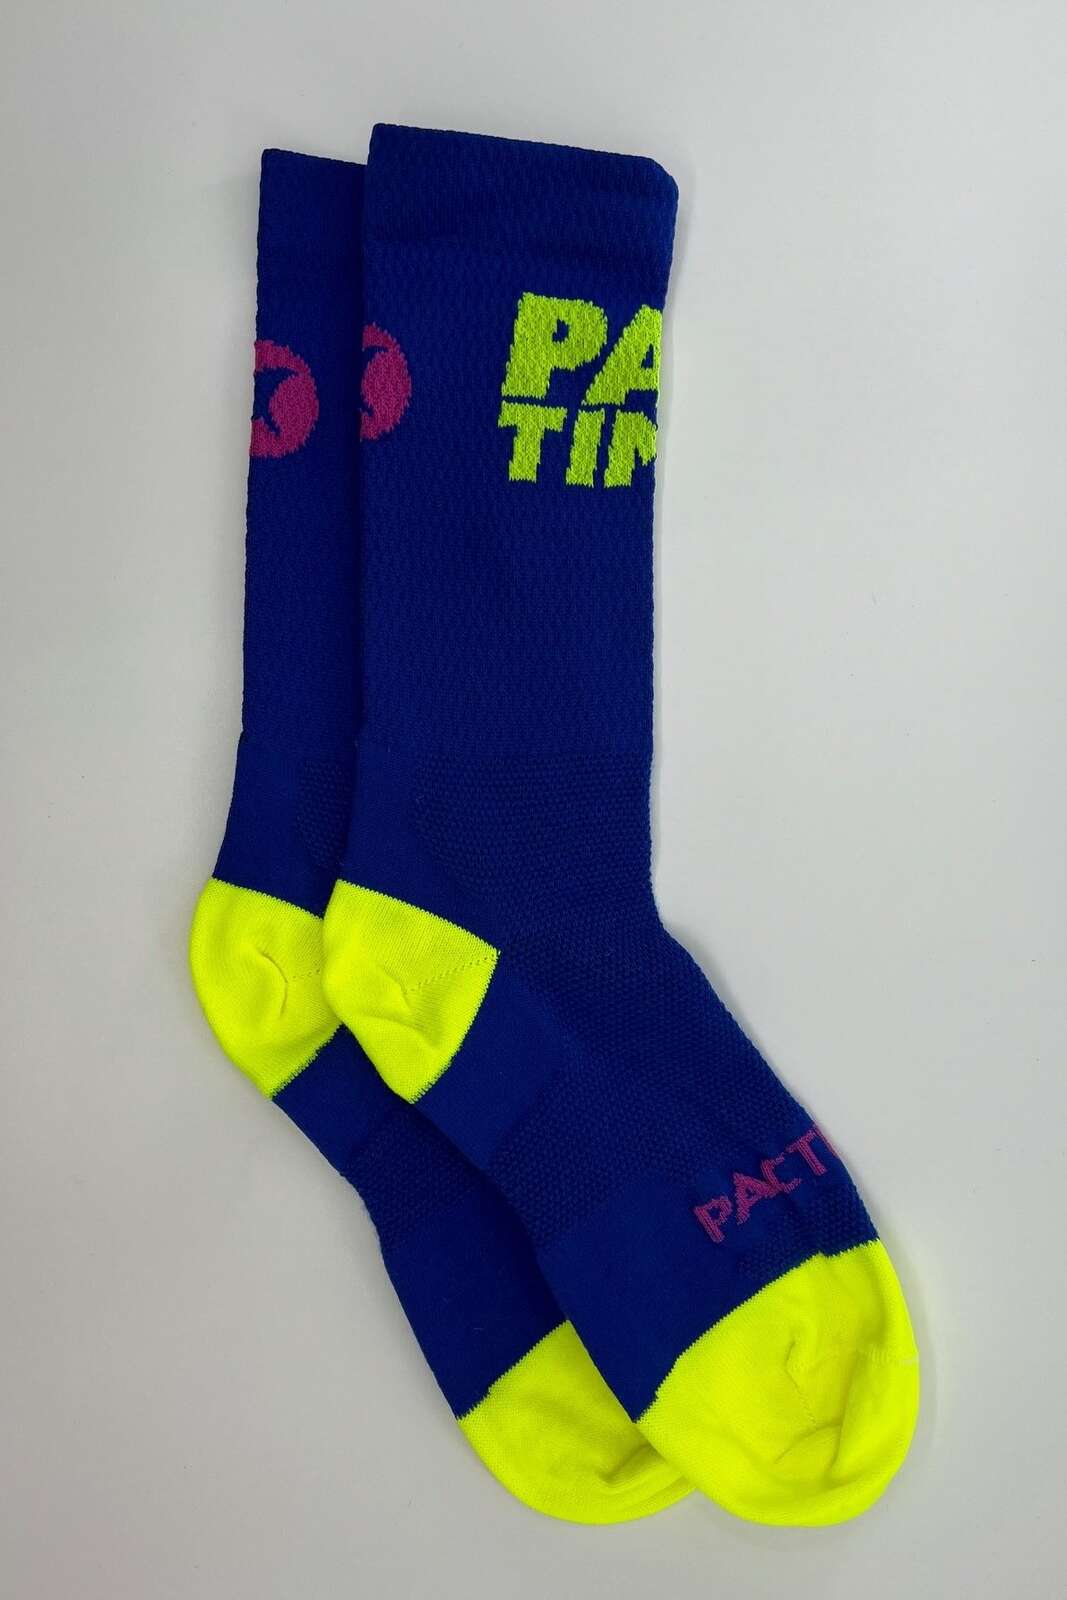 Blue Pactimo Cycling Socks